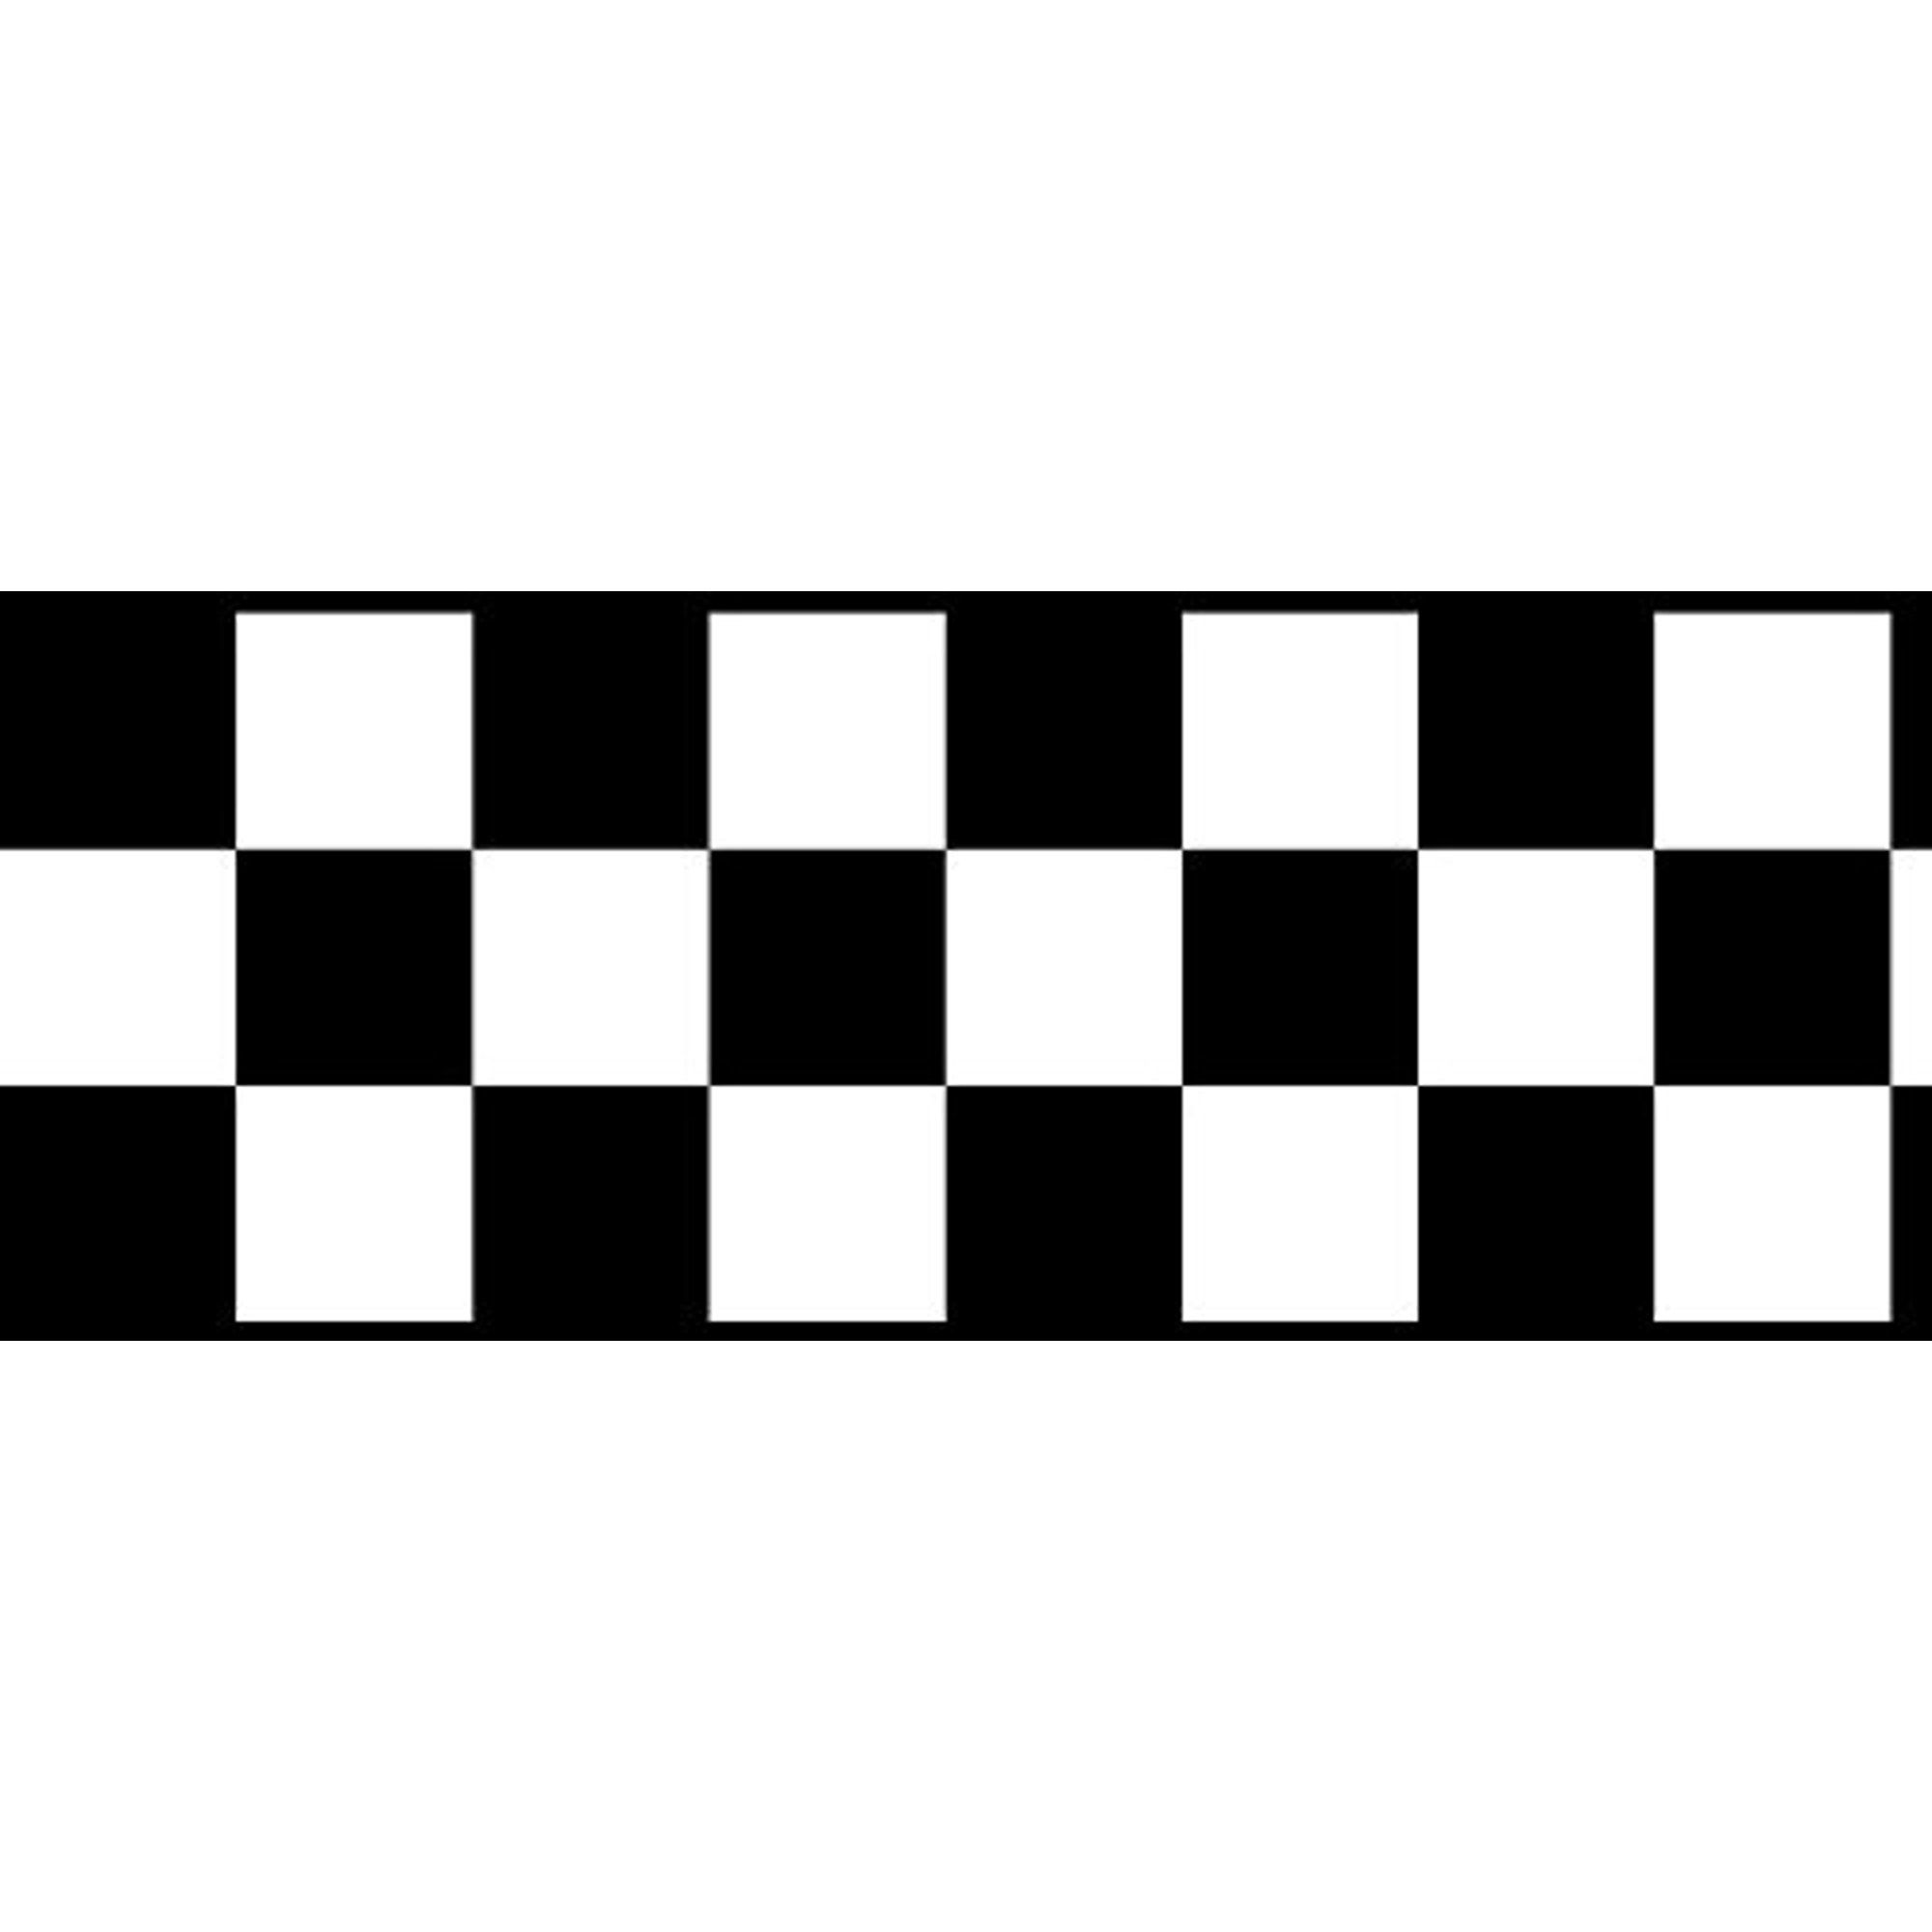 Checkered Flag Cars Nascar Wallpaper Border 4.5 Inch (Black Edge) By CheckeredWallpaperBorder.com